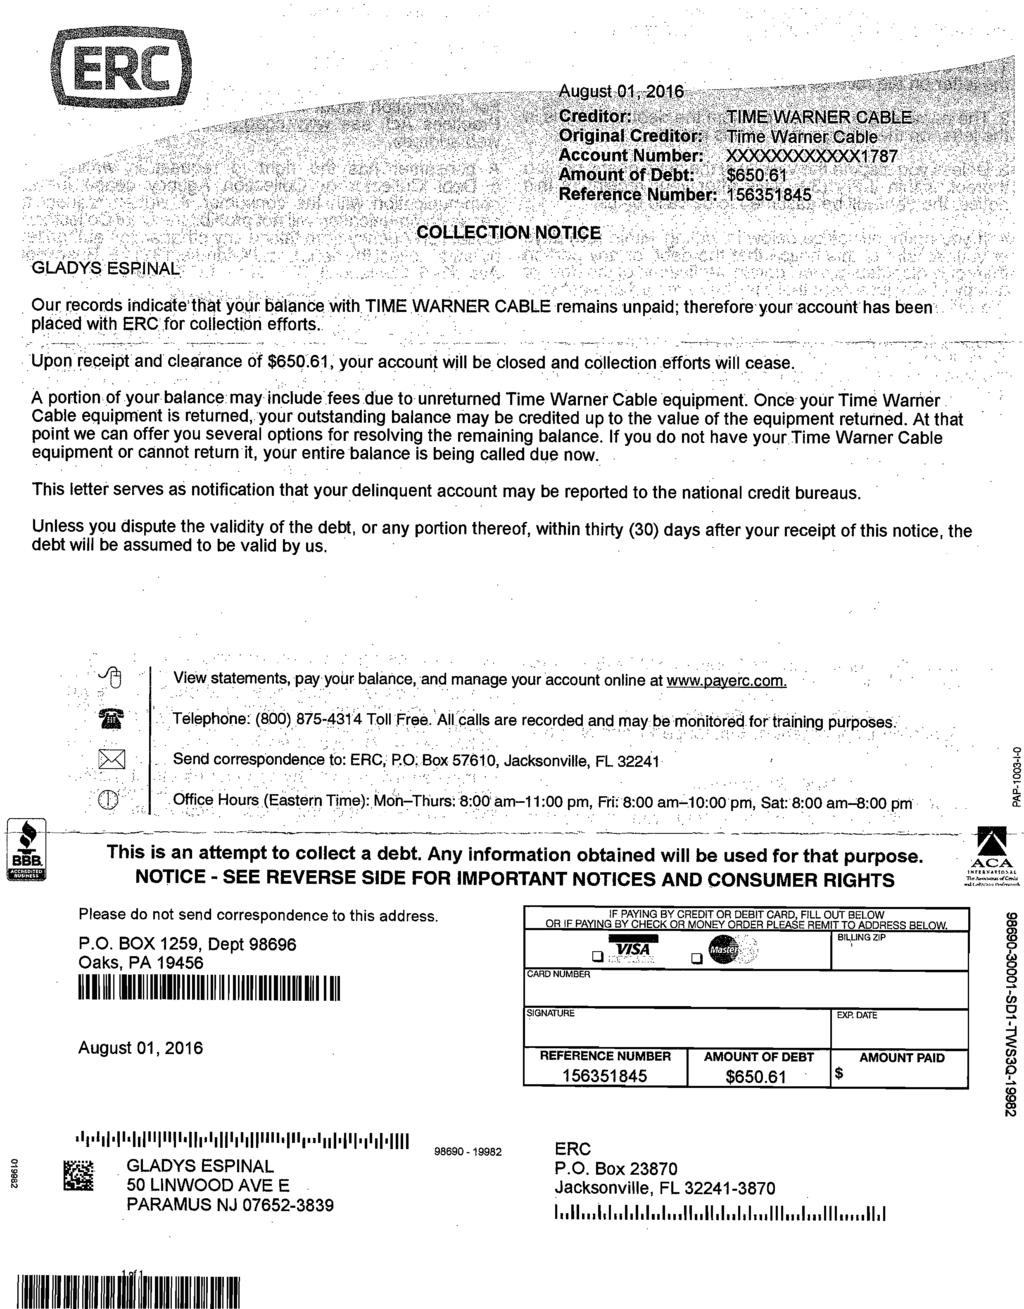 Case 217-cv-05641-JMV-SCM Document 1